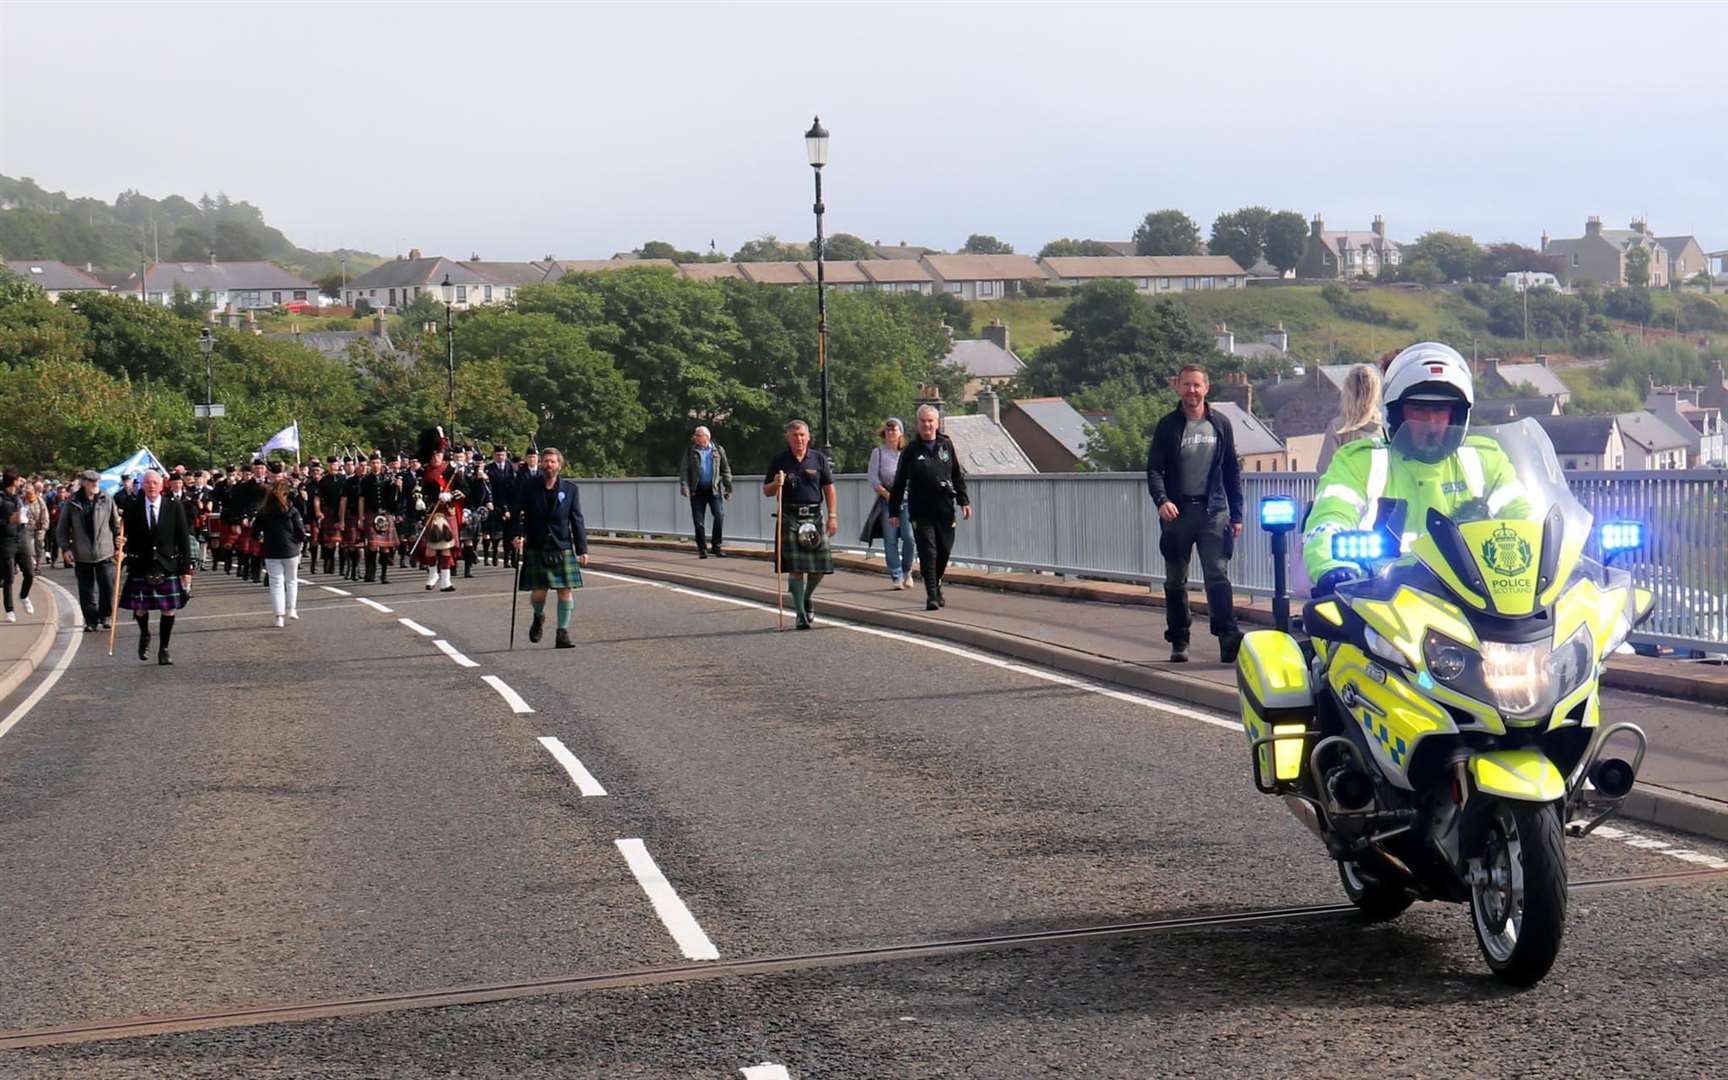 A Police Scotland motorbike escort led the parade through the village.